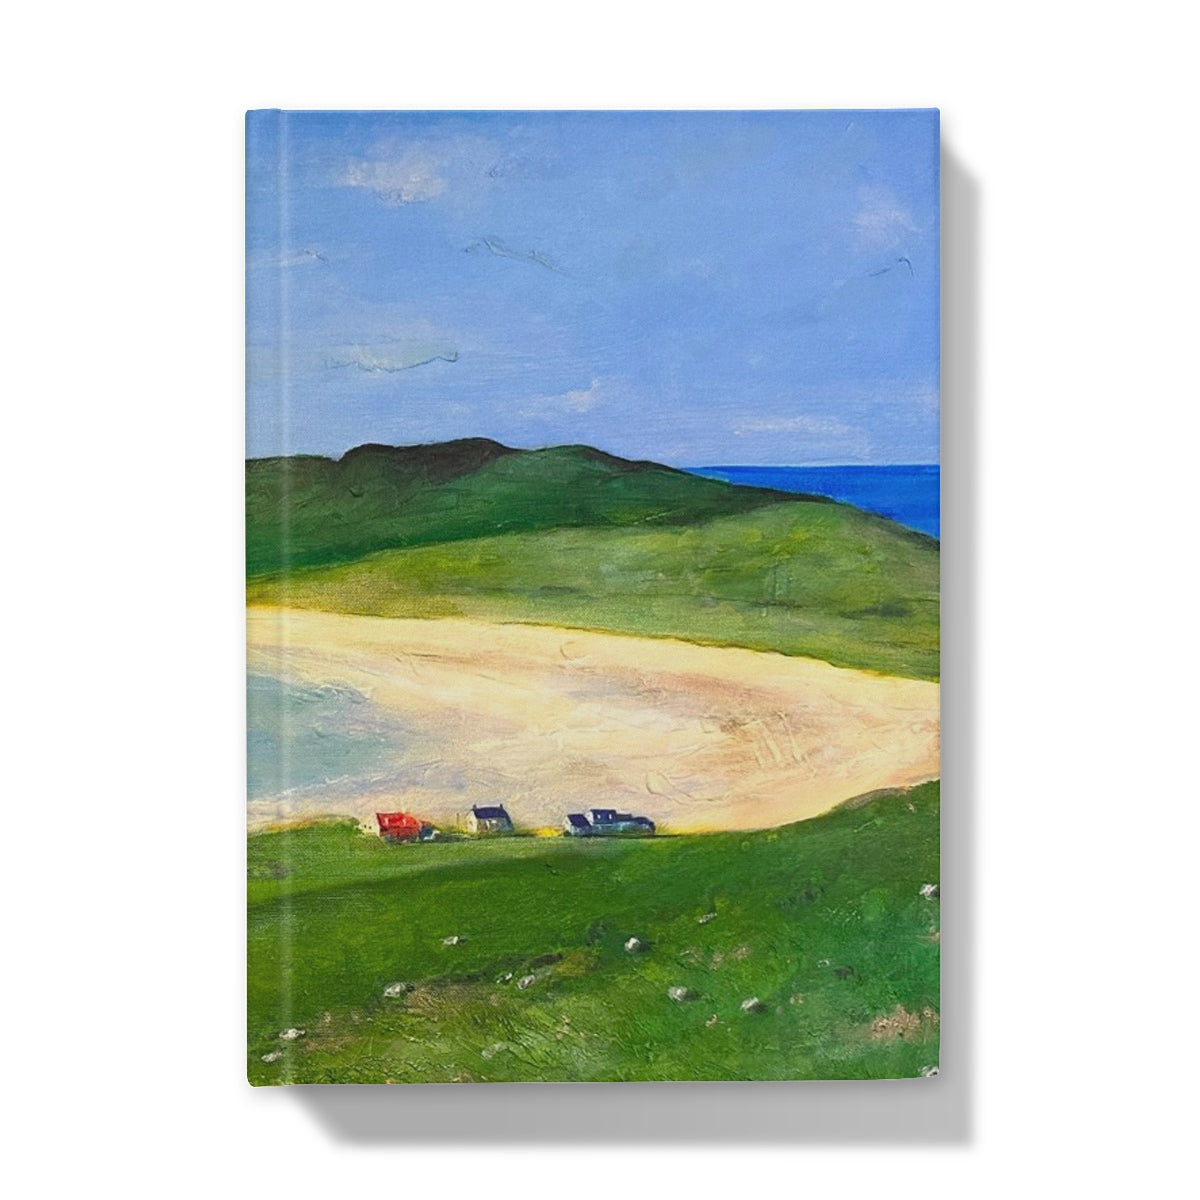 Balephuil Beach Tiree Art Gifts Hardback Journal-Journals & Notebooks-Hebridean Islands Art Gallery-5"x7"-Plain-Paintings, Prints, Homeware, Art Gifts From Scotland By Scottish Artist Kevin Hunter